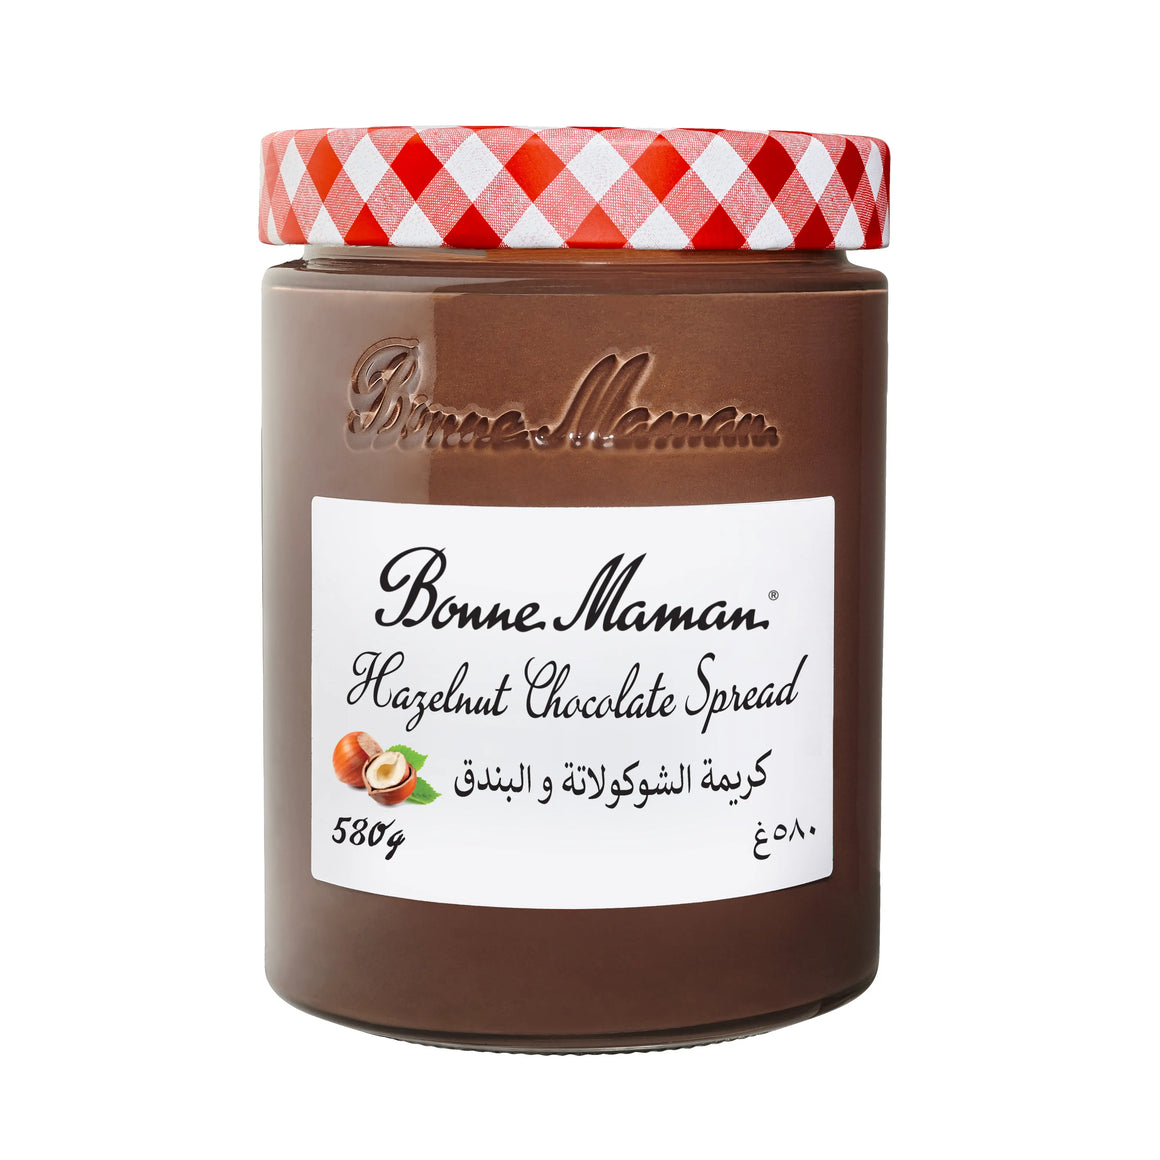 Bonne Maman Hazelnut Chocolate Spread with Cocoa, No Palm Oil , 20% Hazelnut, 580g Bonne Maman